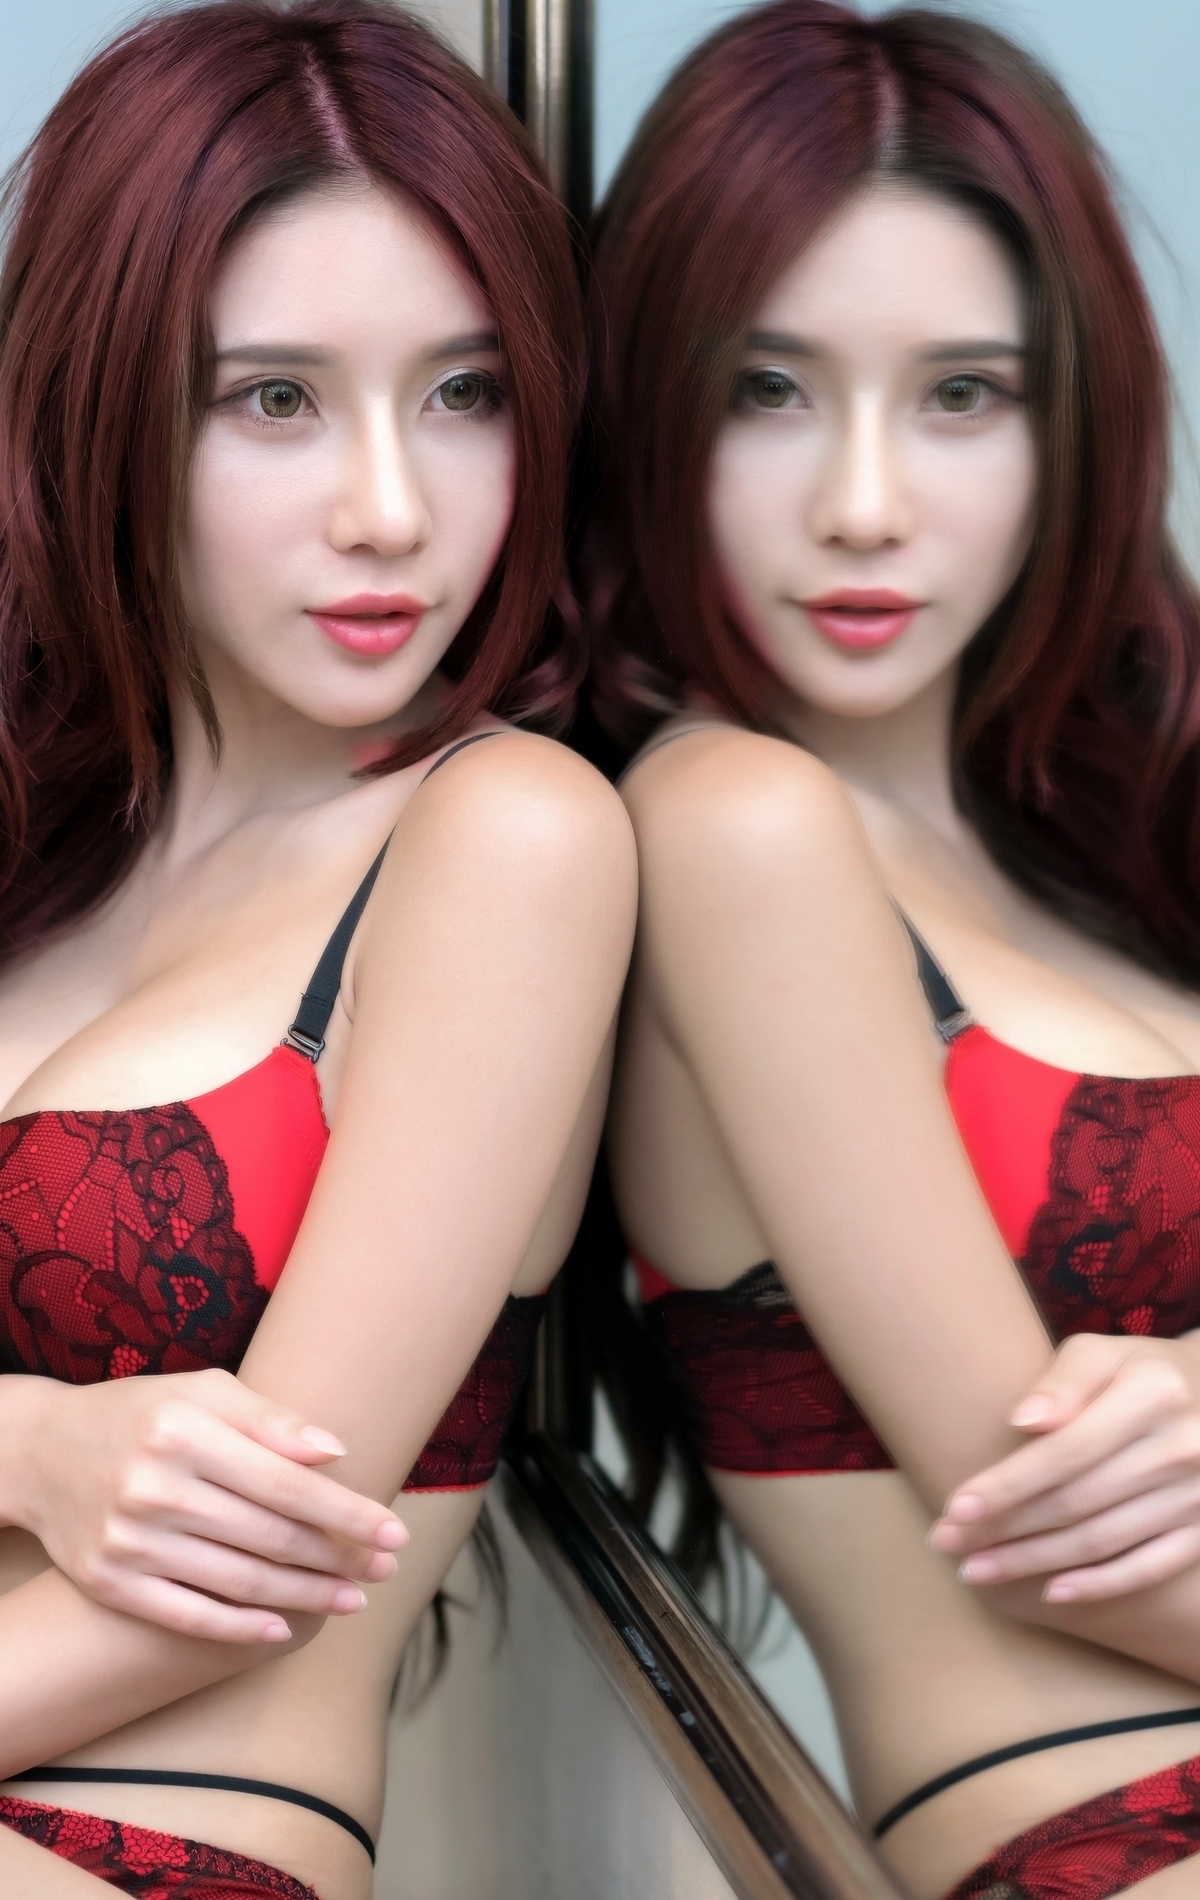 Image: Asian, girl, posing, mirror, reflection, look, breast, bra